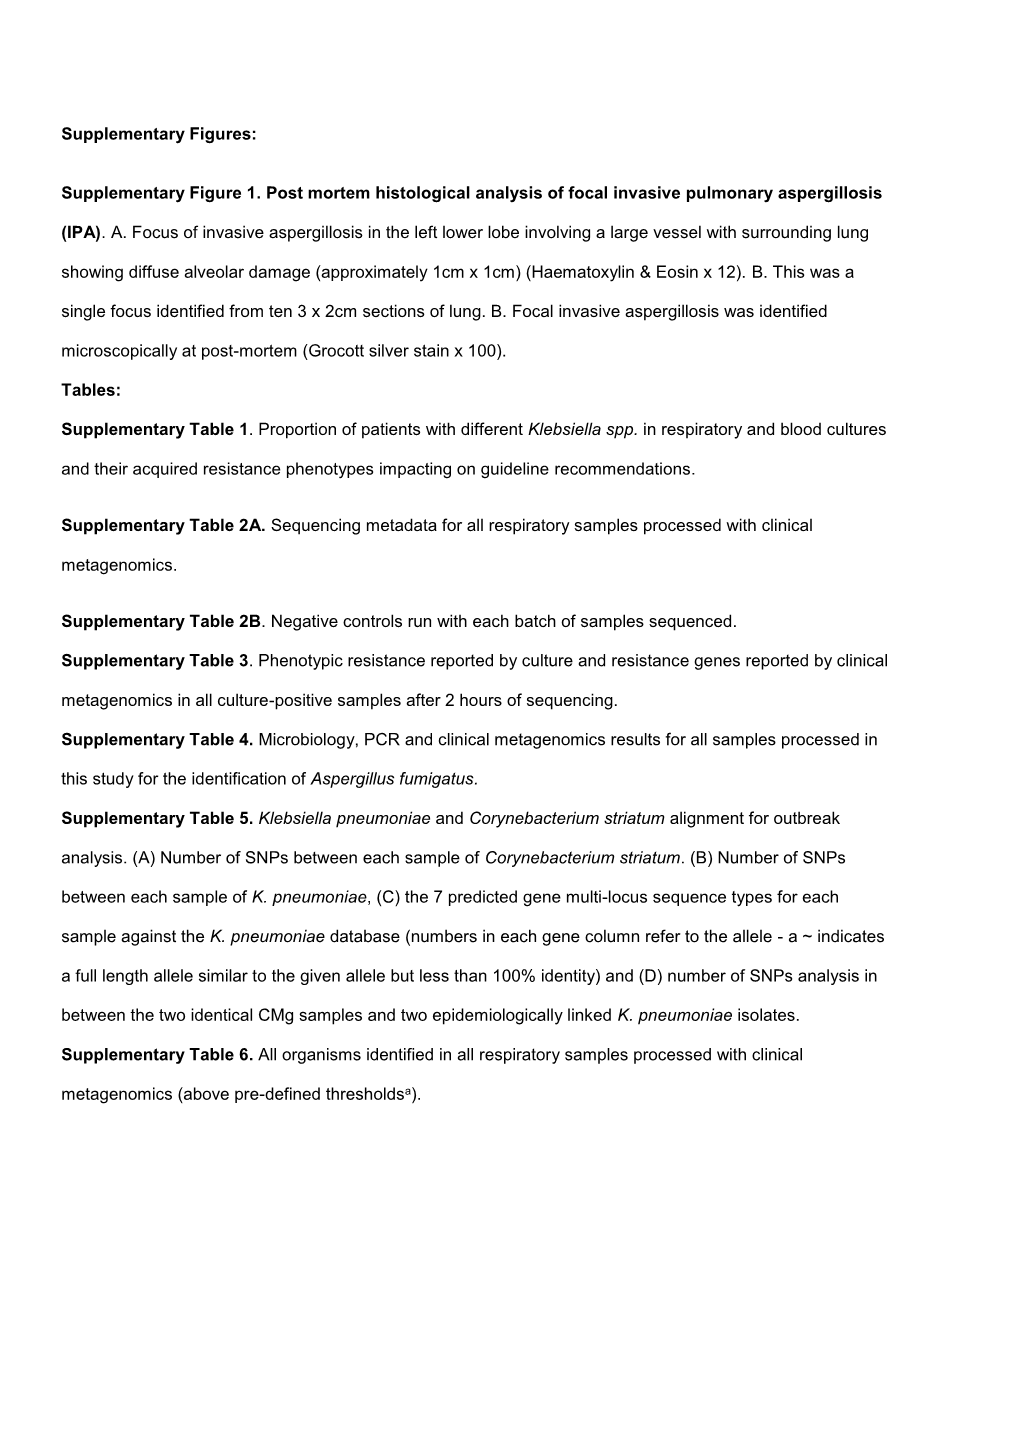 Supplementary Figure 1. Post Mortem Histological Analysis of Focal Invasive Pulmonary Aspergillosis